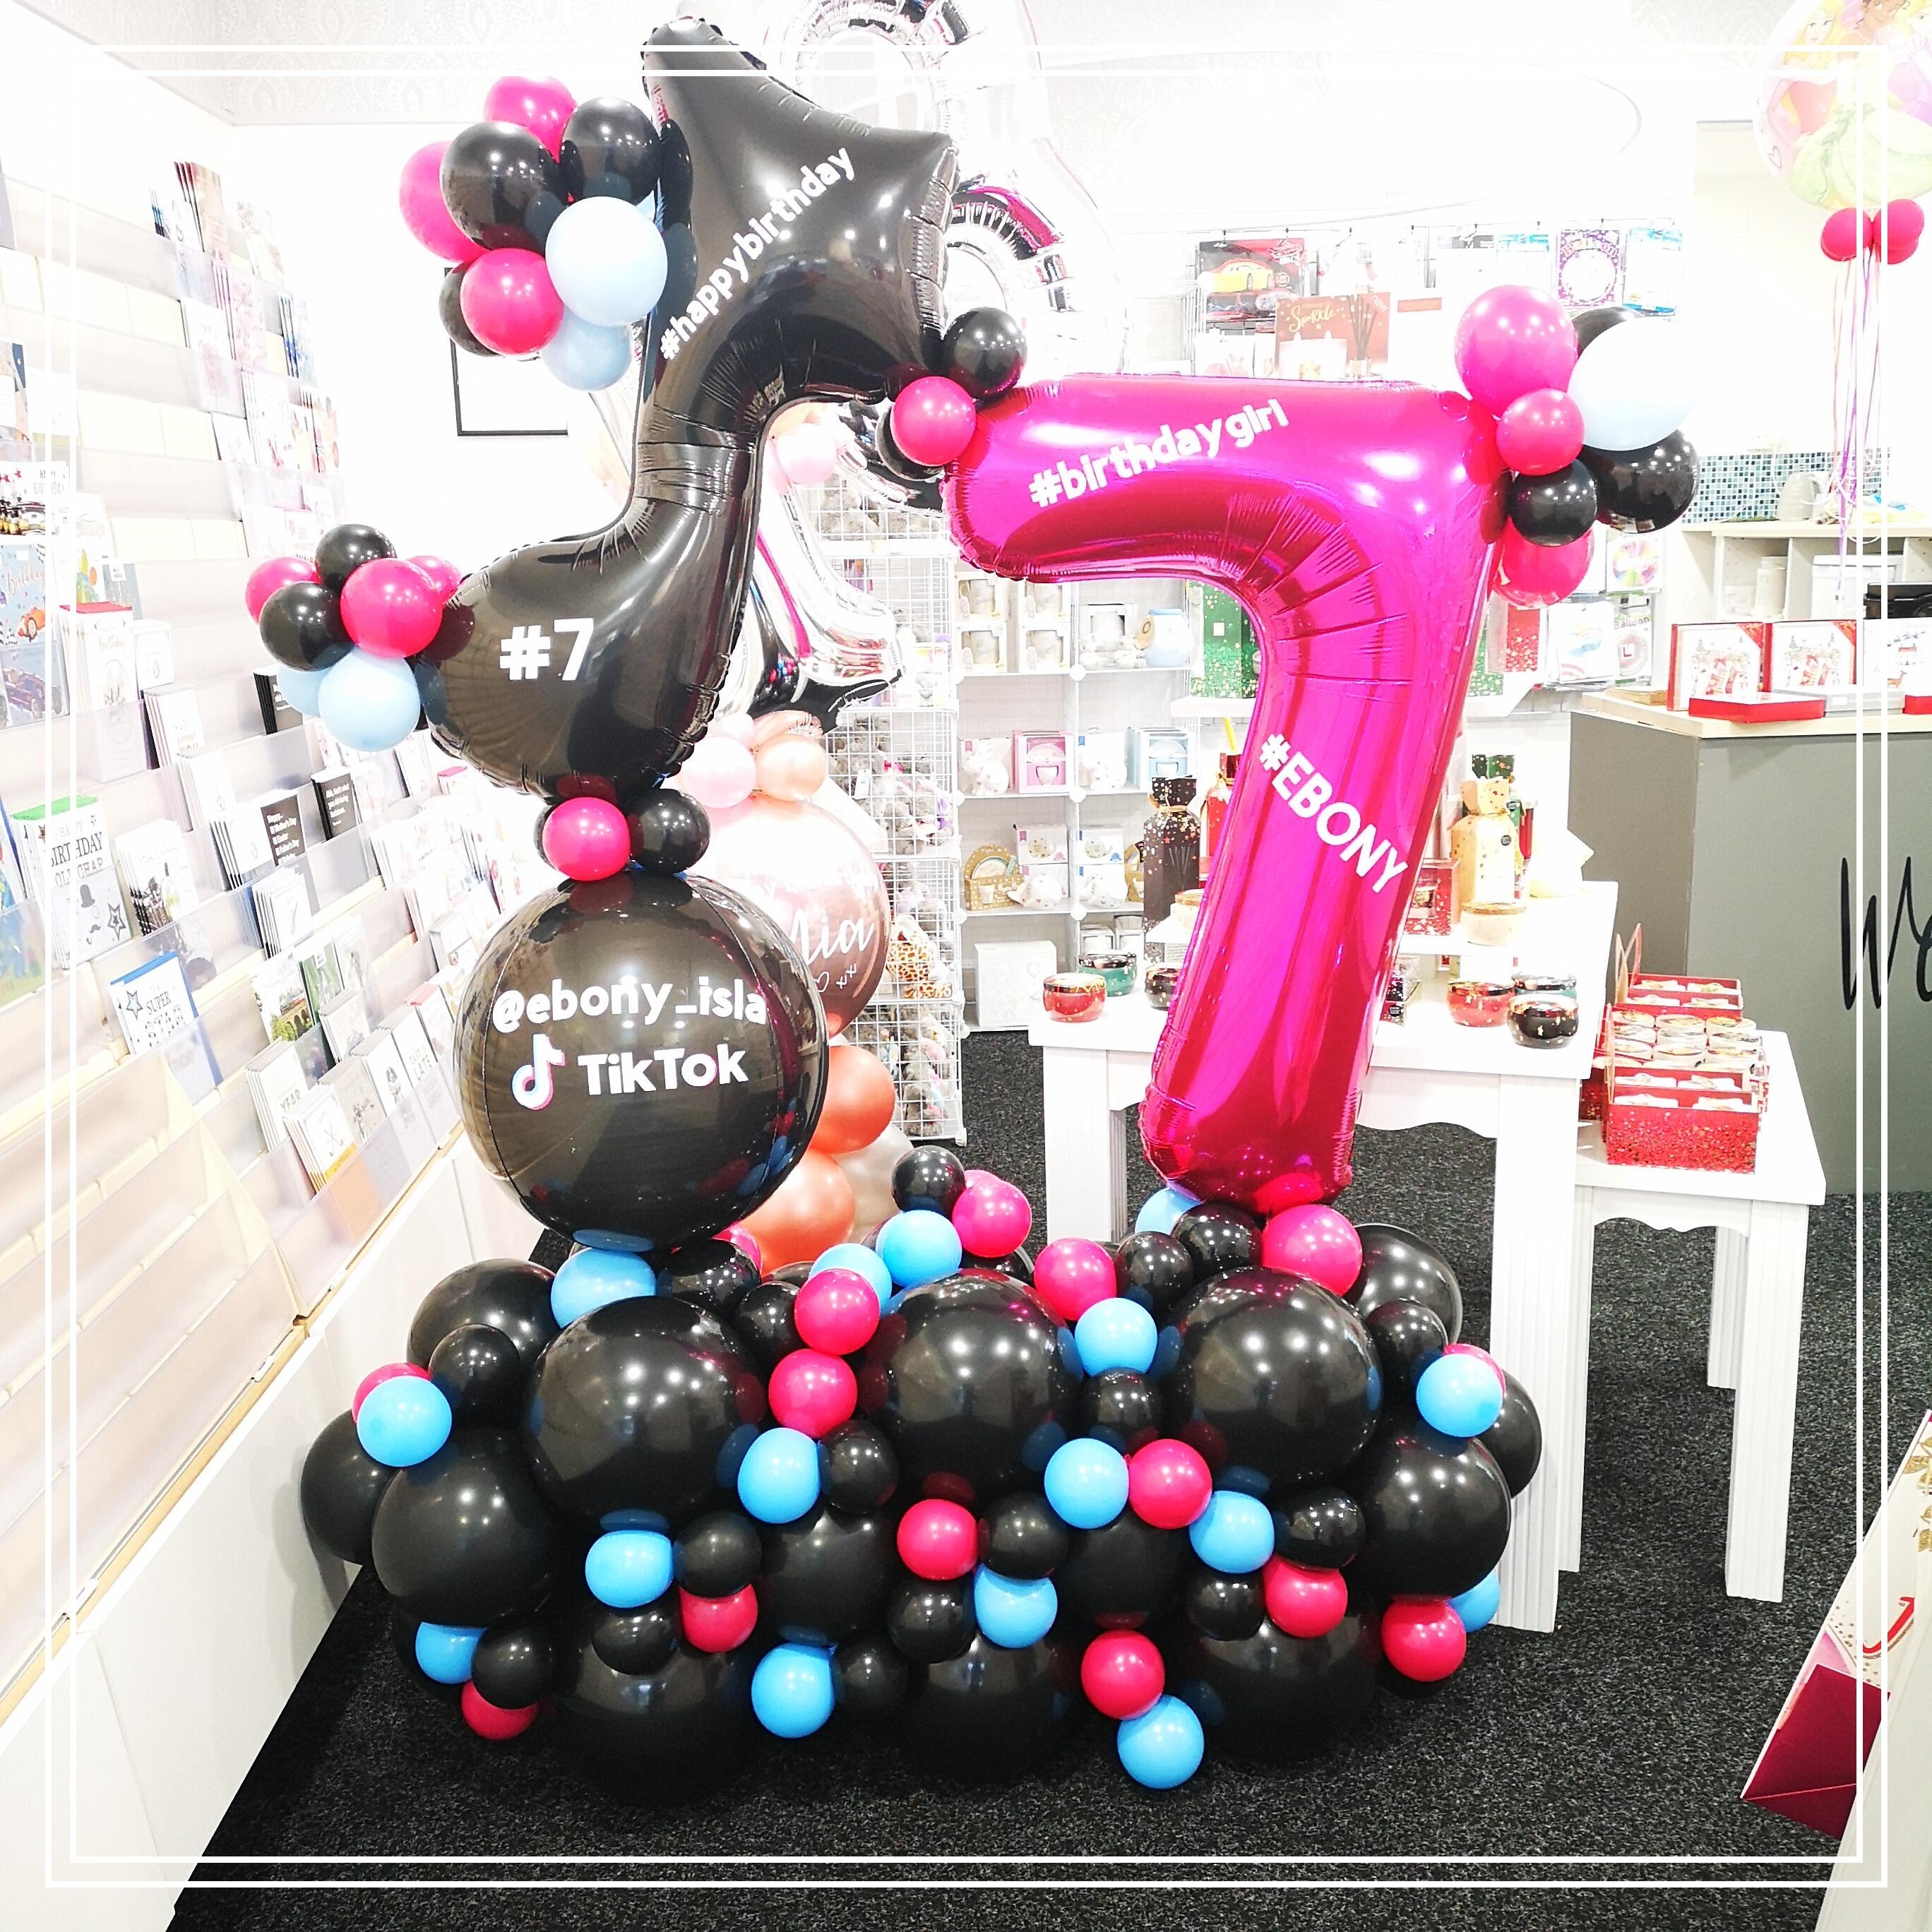 Tik Tok Themed Double Number Balloon Display for Birthdays